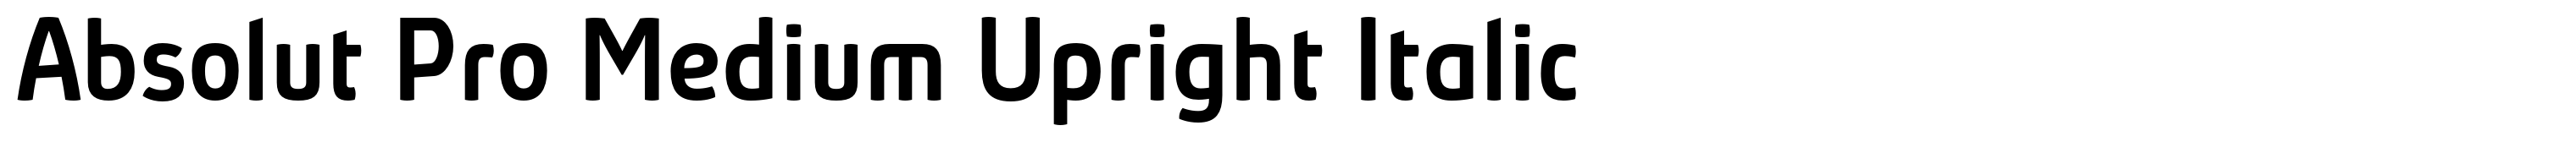 Absolut Pro Medium Upright Italic